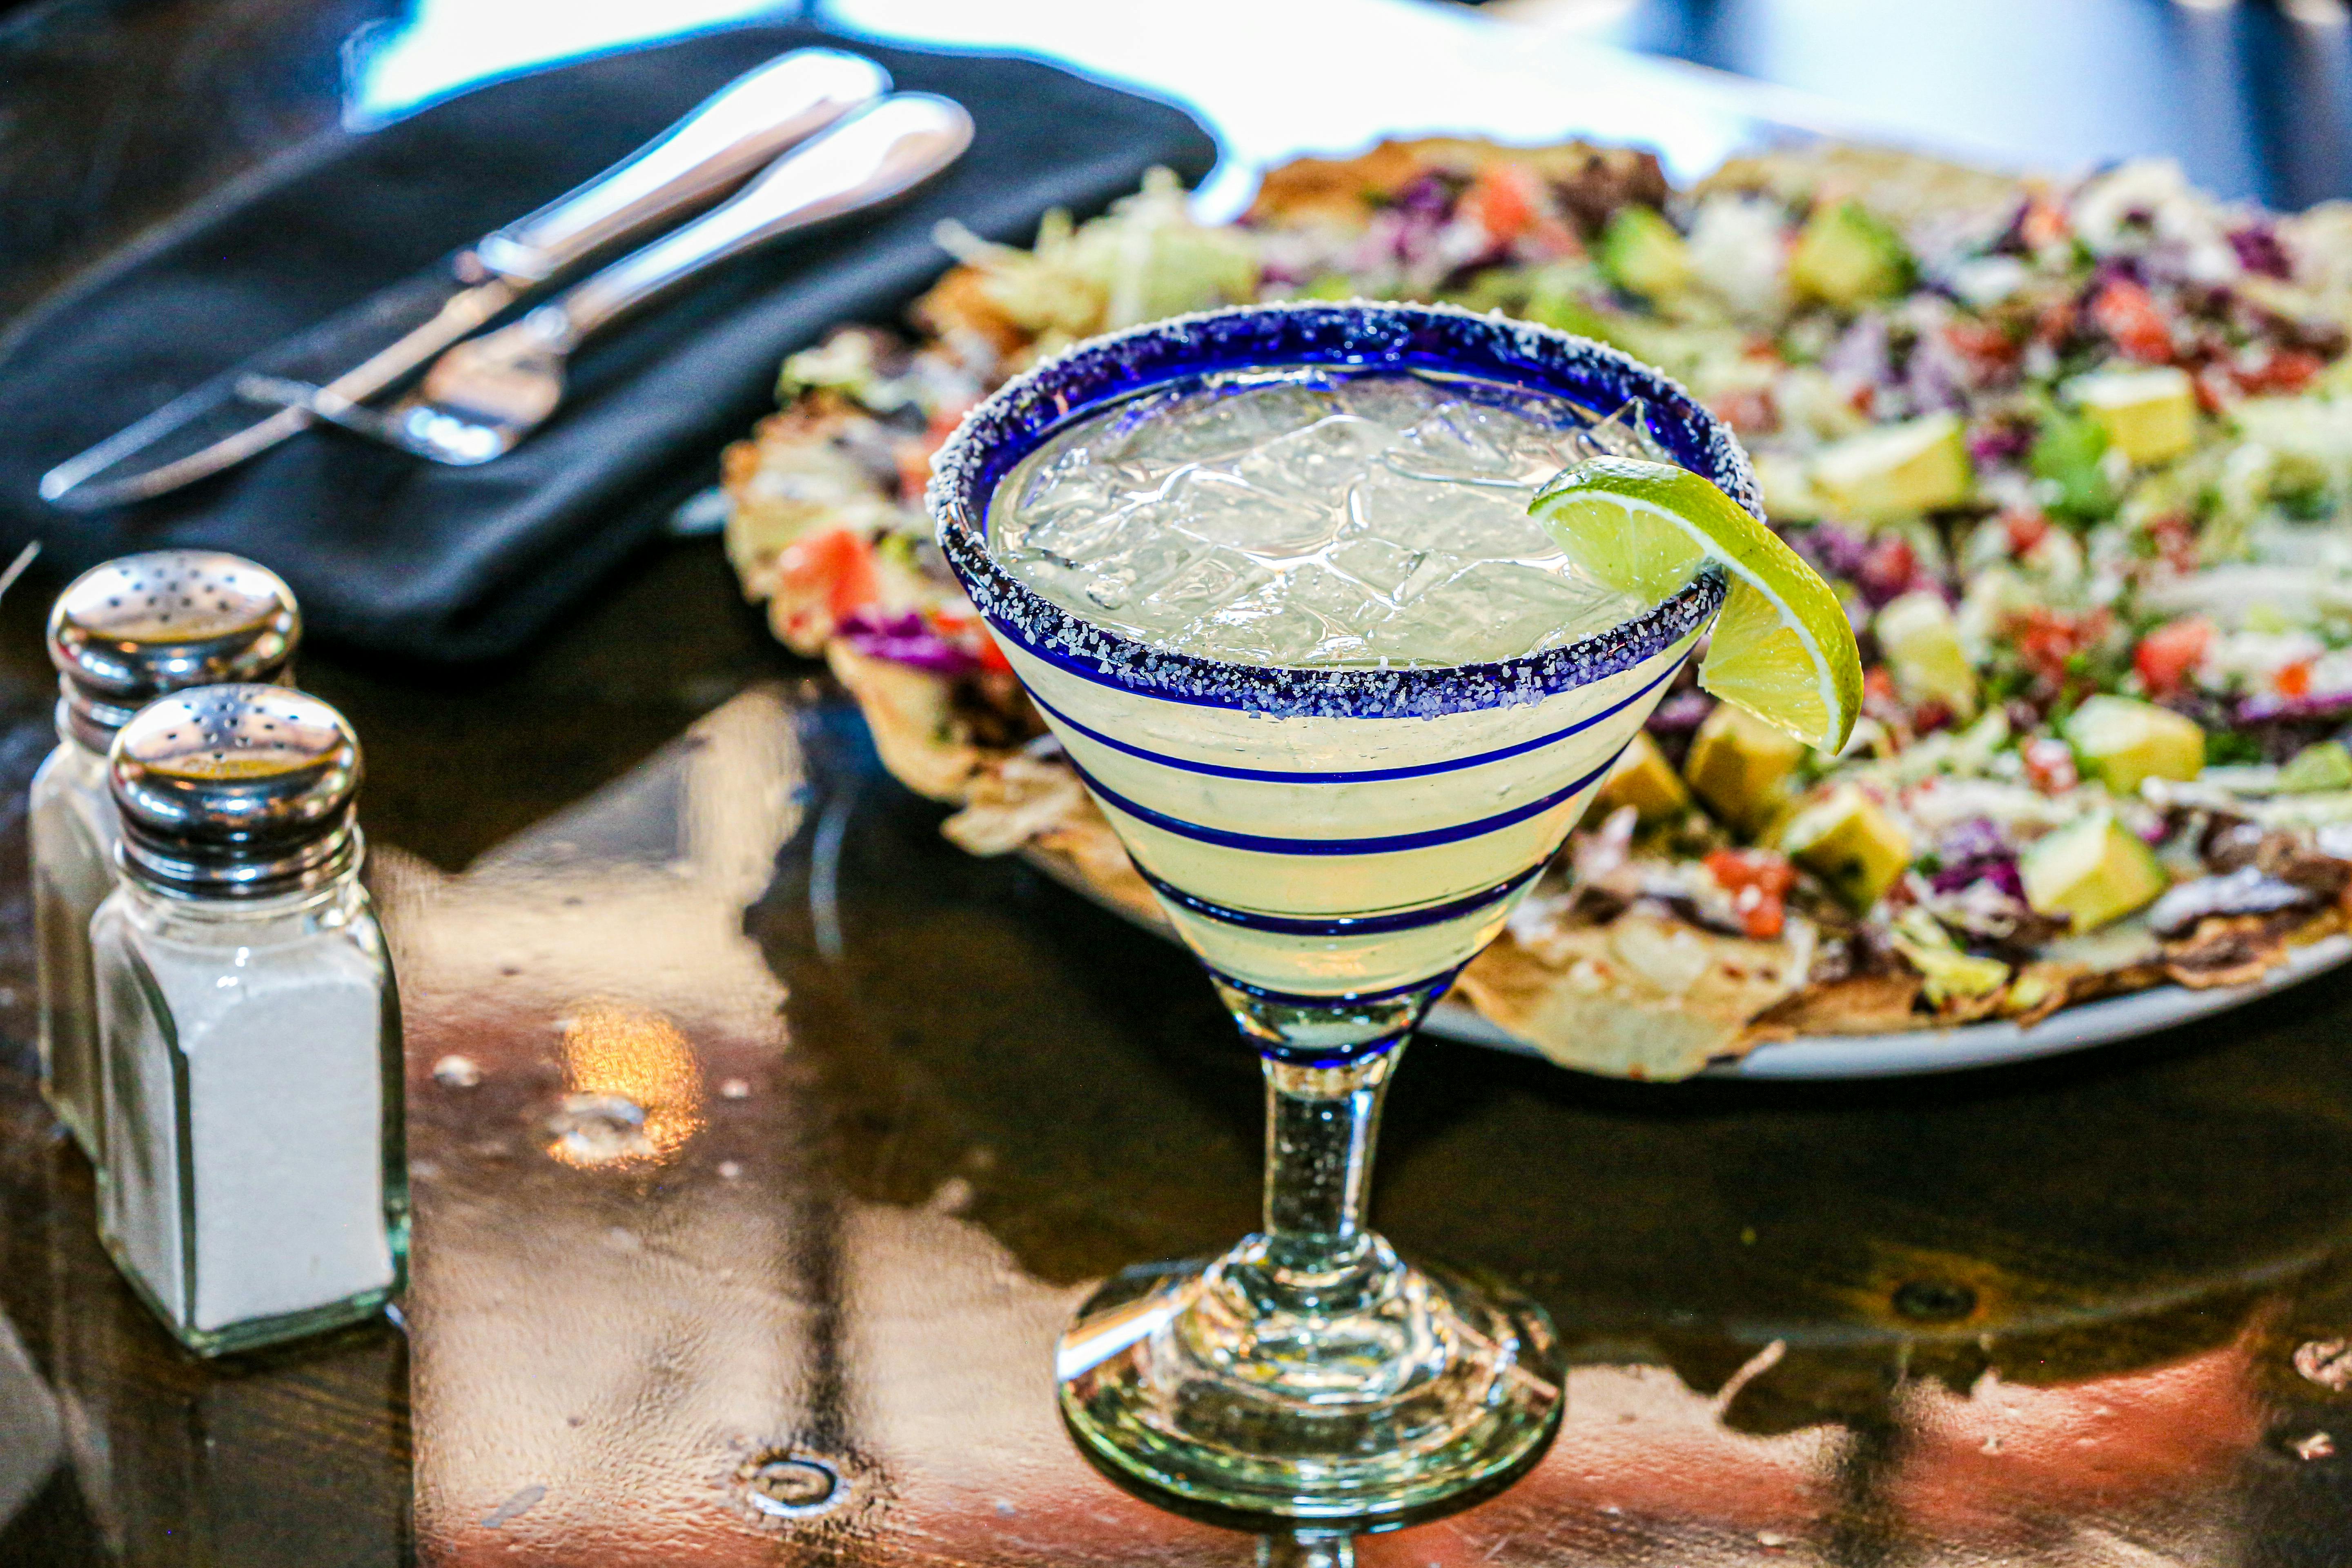 Margarita Glass on Table · Free Stock Photo